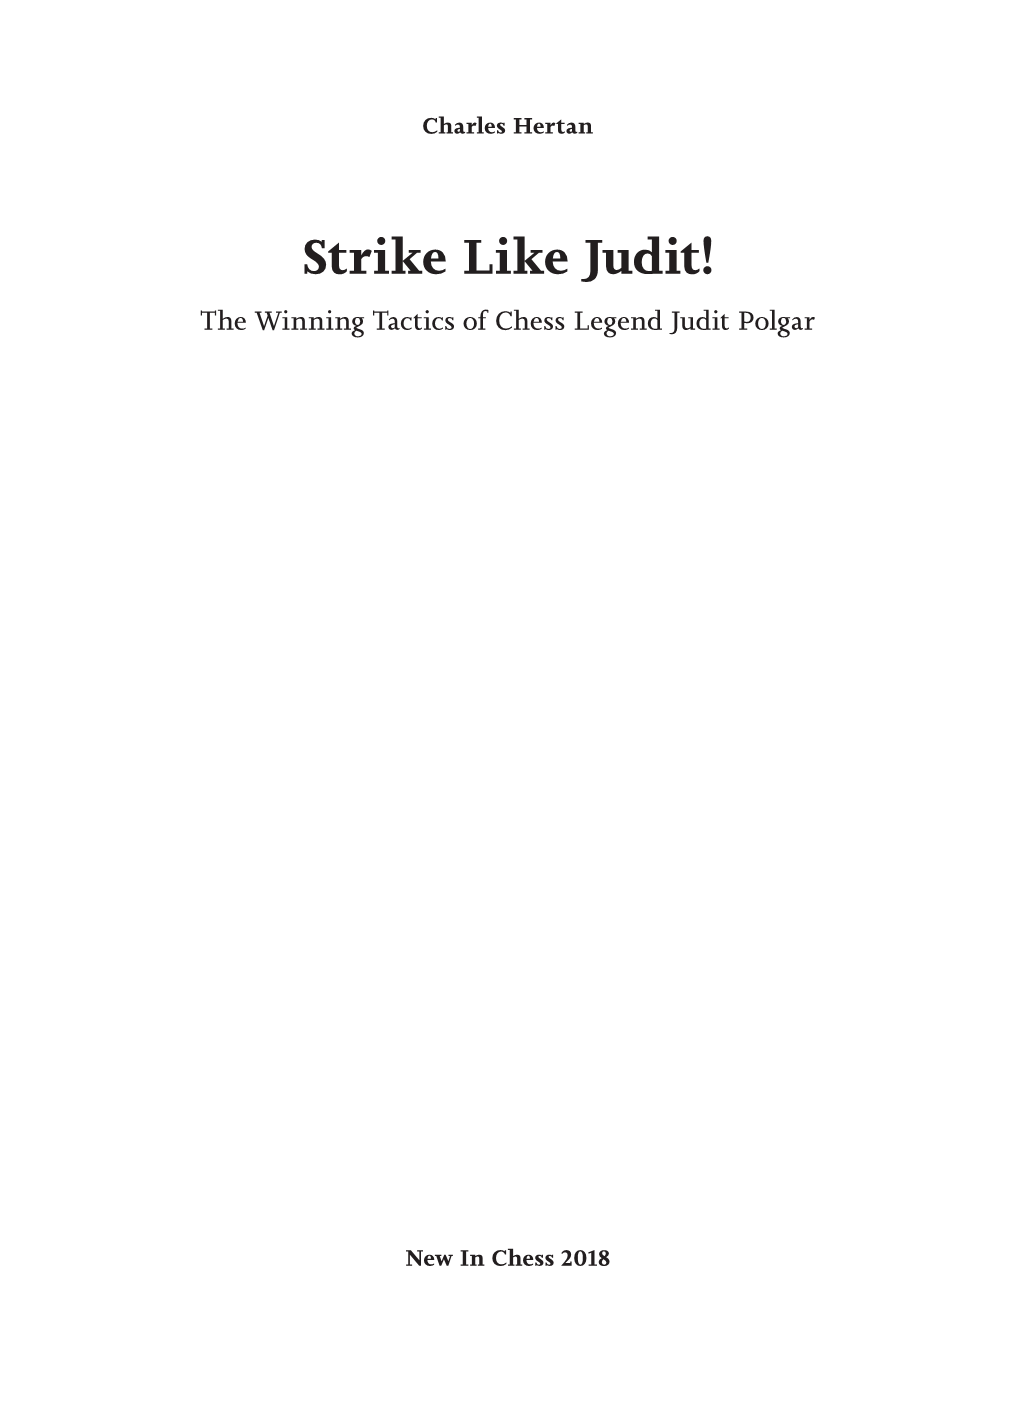 Strike Like Judit! the Winning Tactics of Chess Legend Judit Polgar